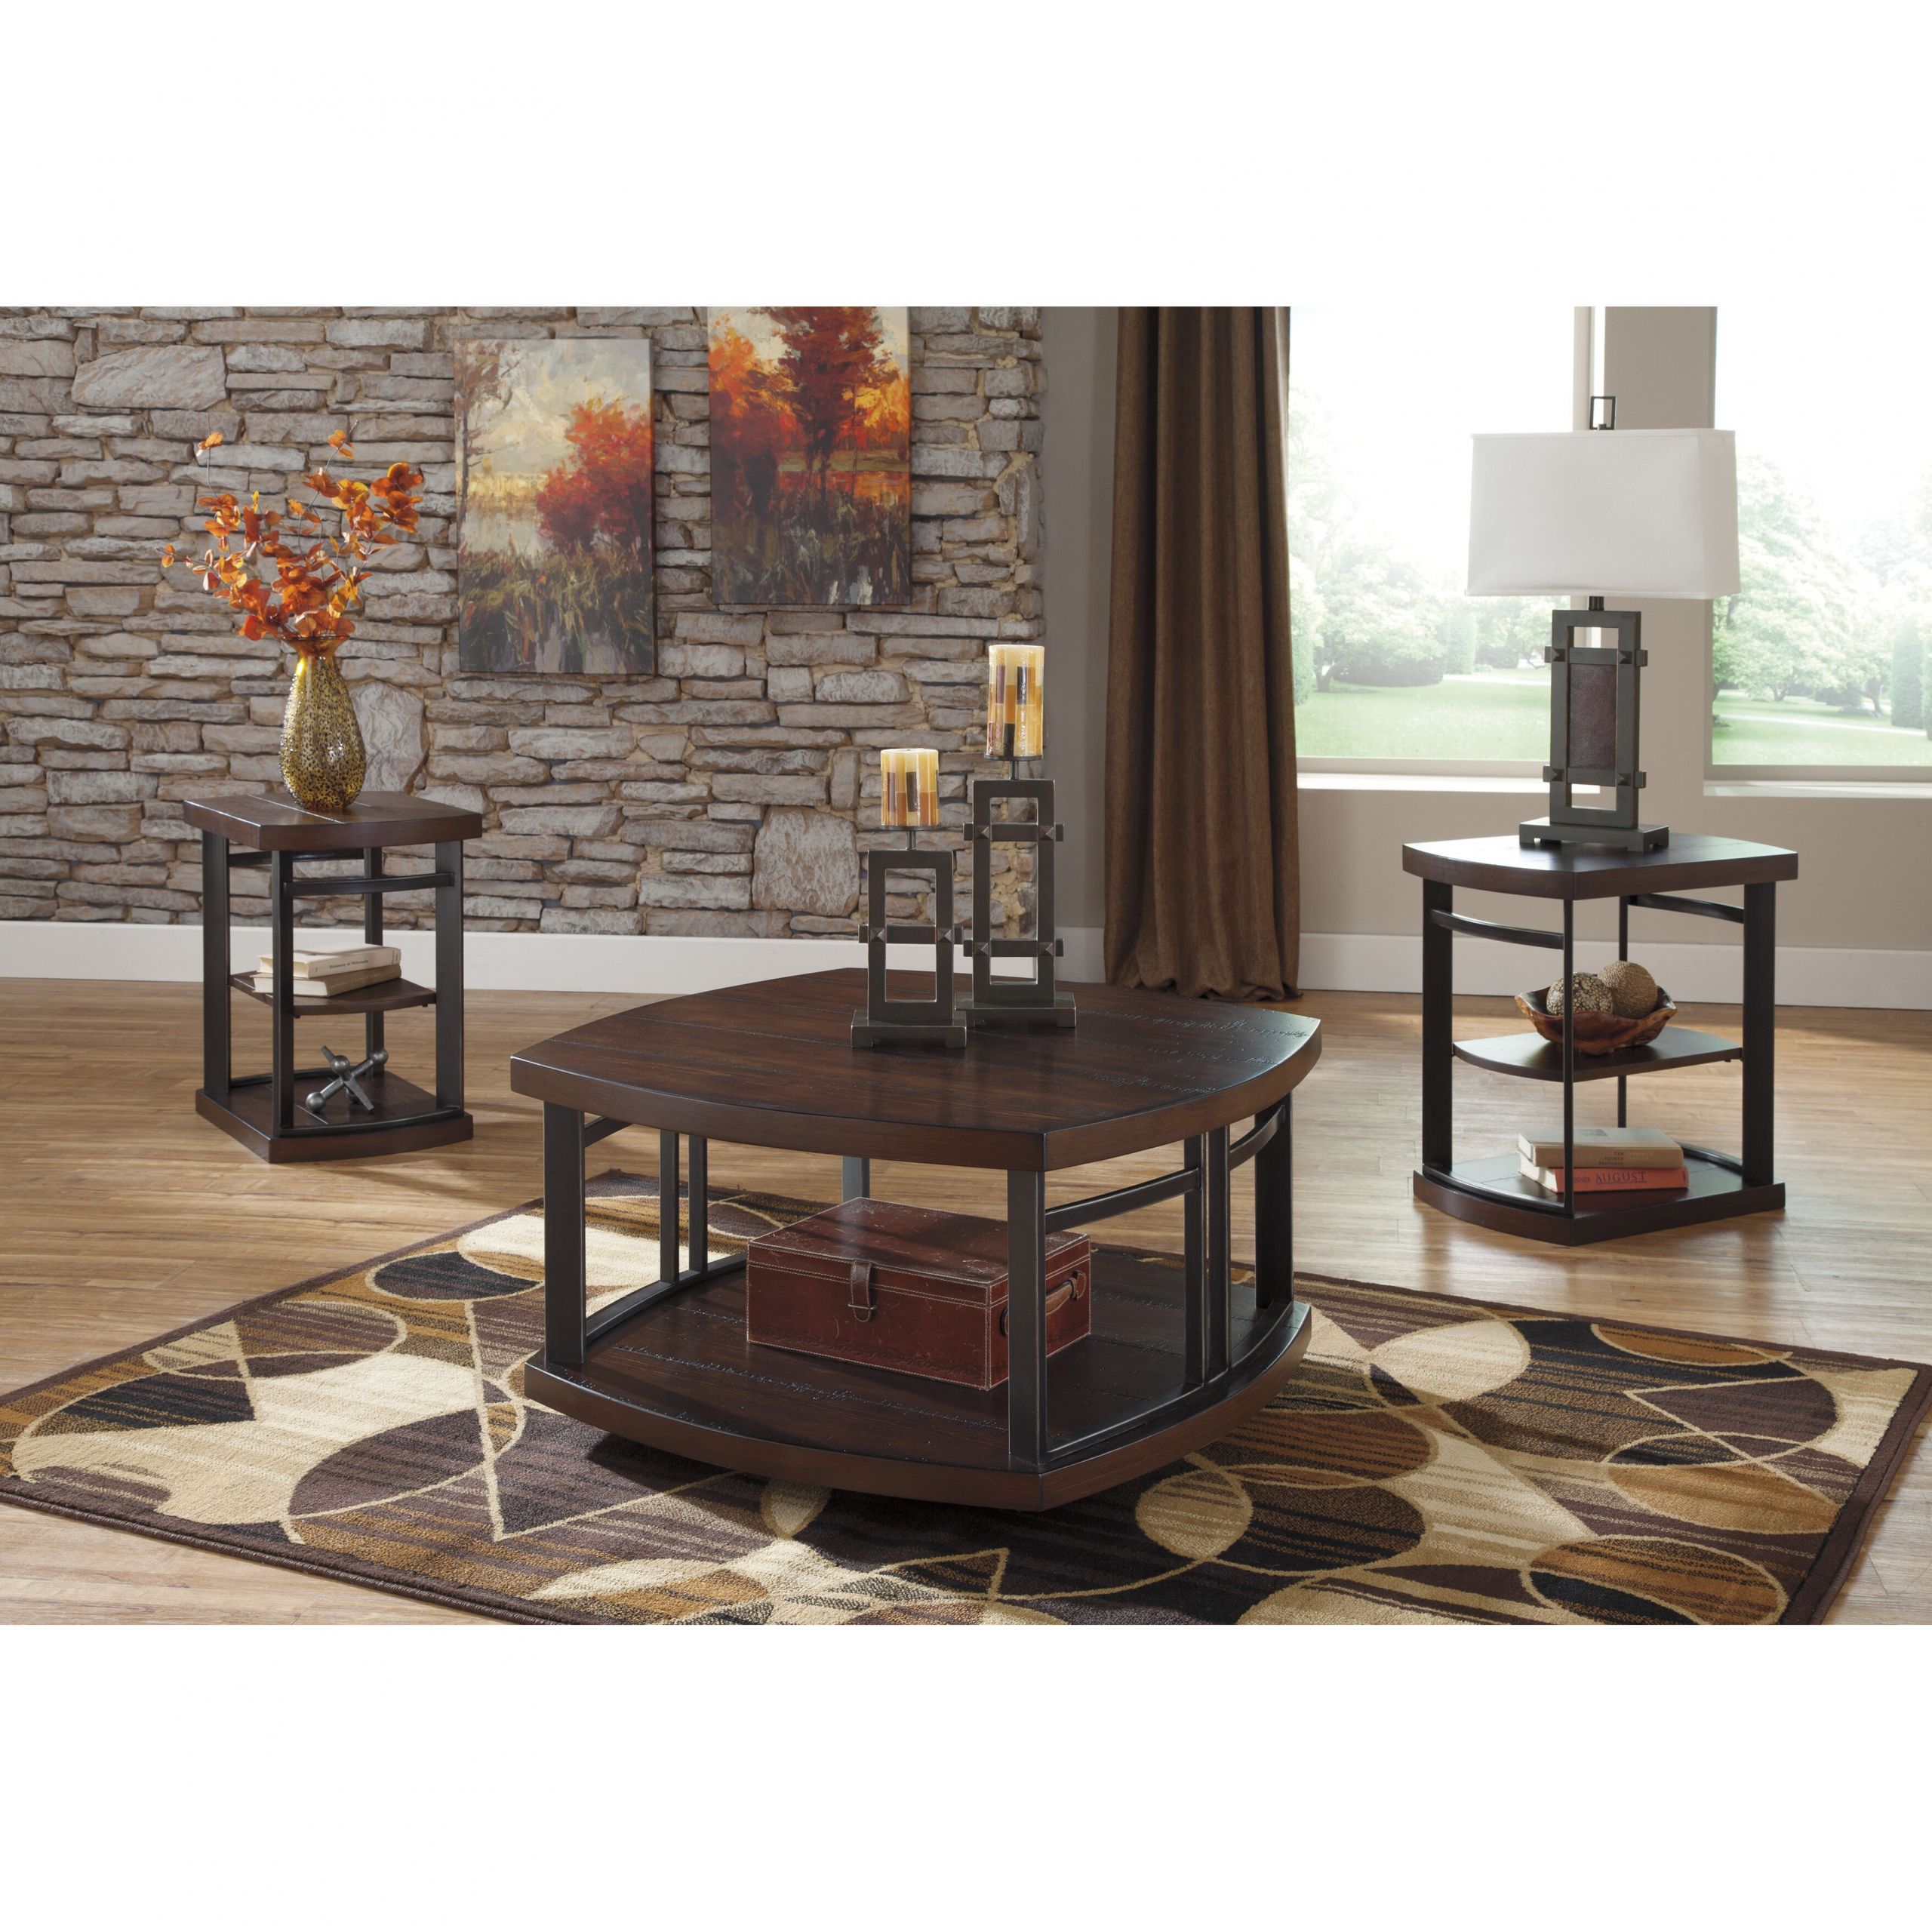 Living Room Coffee Table Sets
 Brayden Studio Dube 3 Piece Coffee Table Set & Reviews